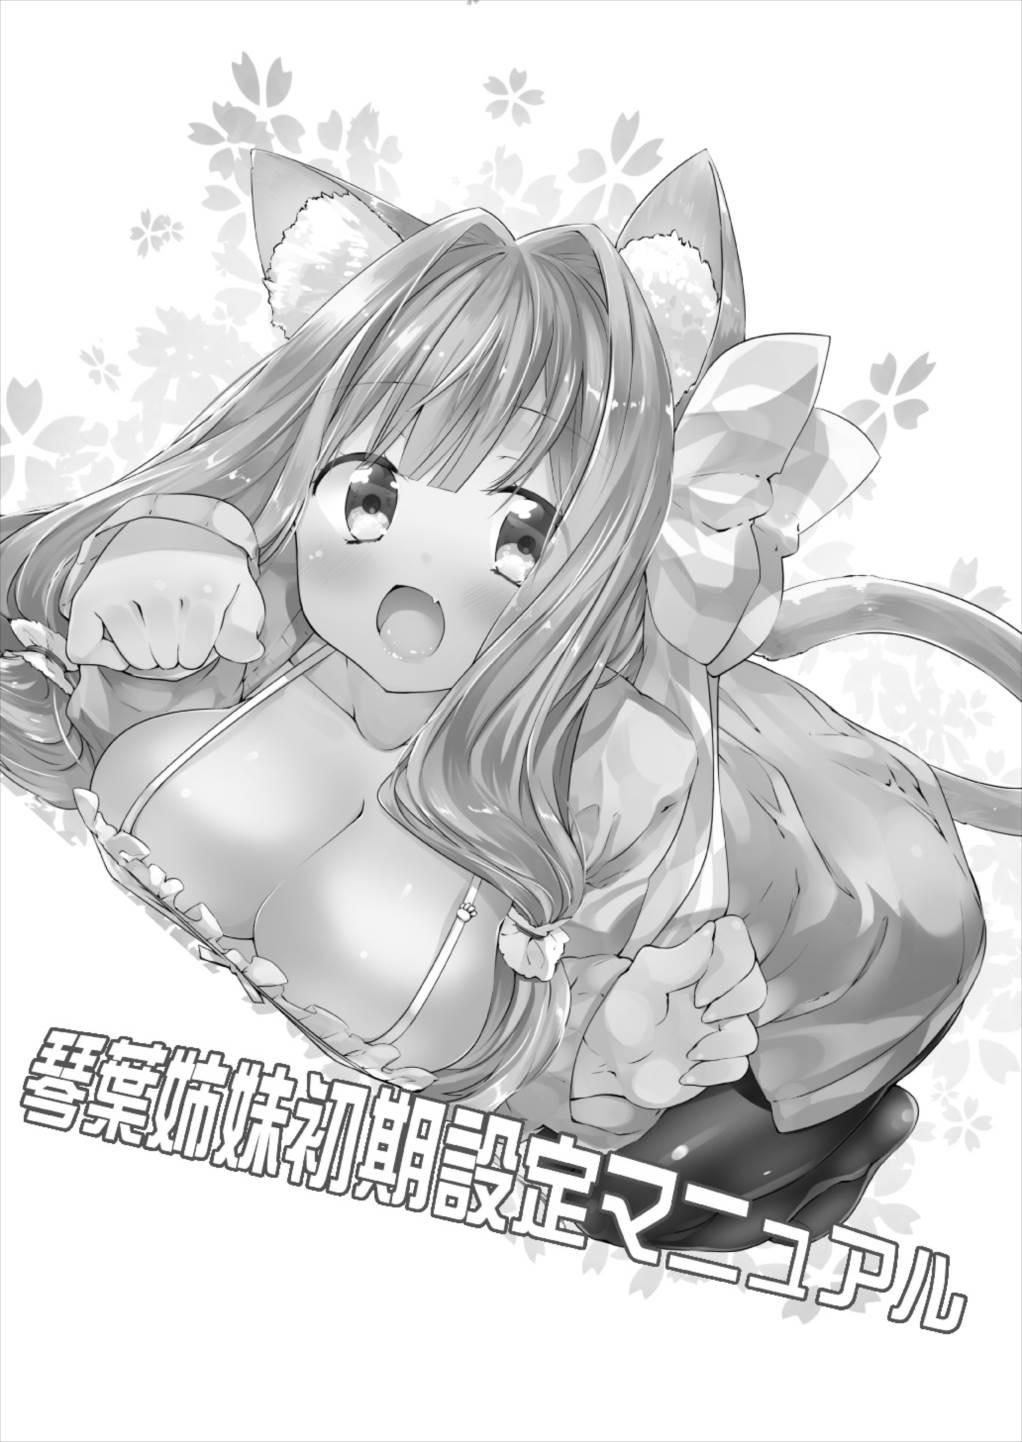 Kotonoha Lovers Vol. 03 - Kotonoha Shimai Shoki Settei Manual 3